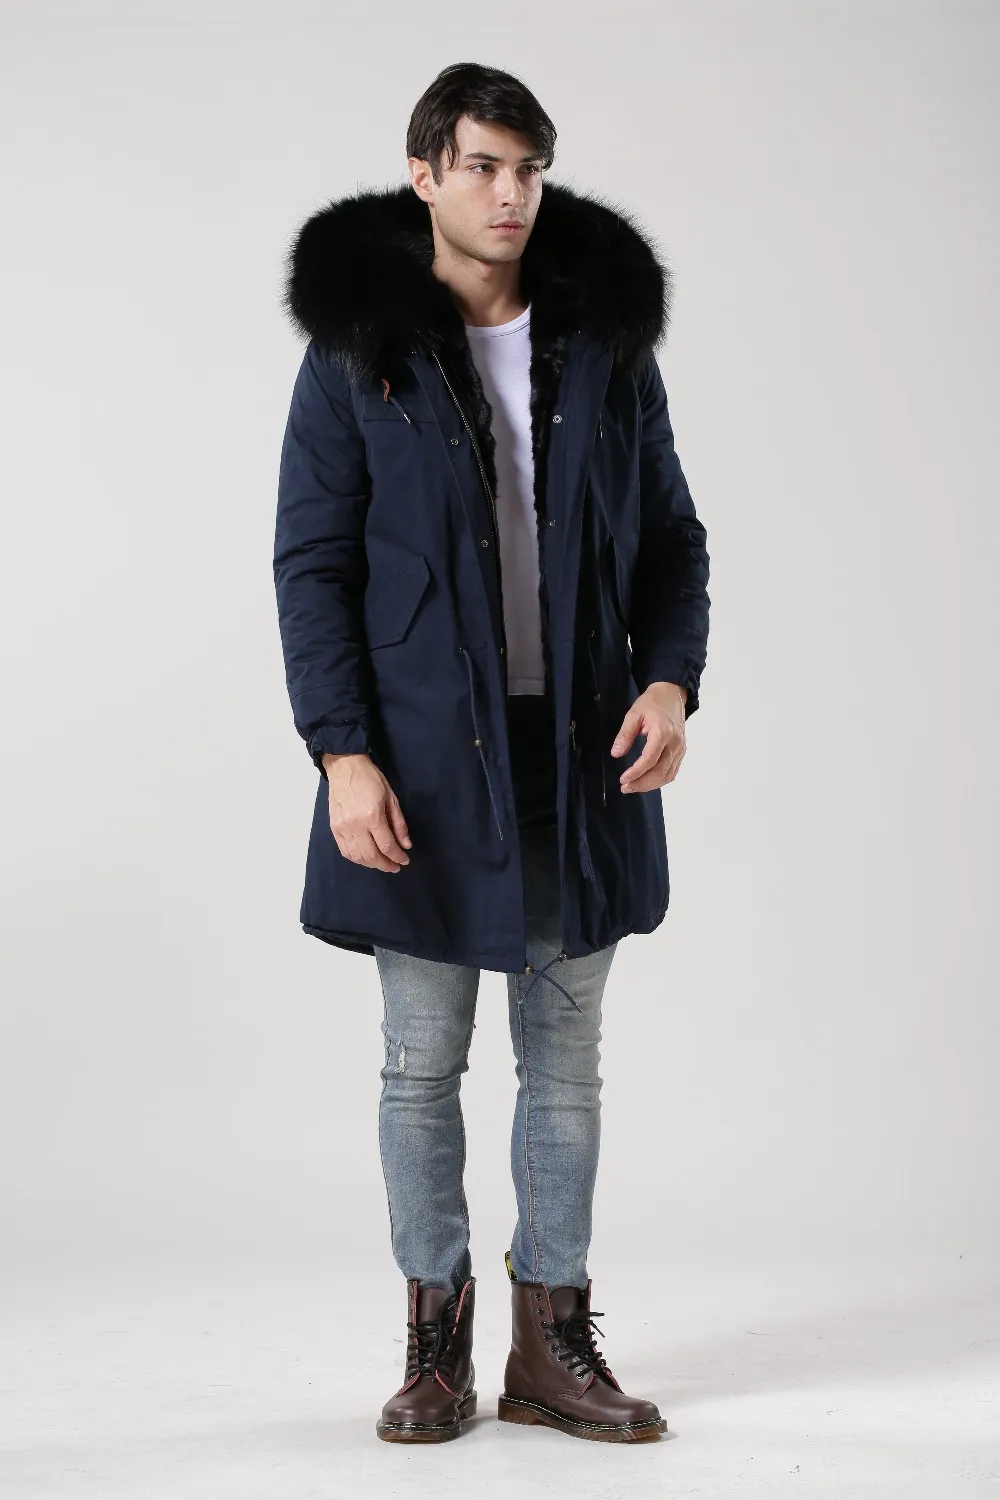 Акция распродажа темно-синяя зимняя парка для молодых мужчин утолщенная длинная стеганая куртка теплая шелковая MR парка